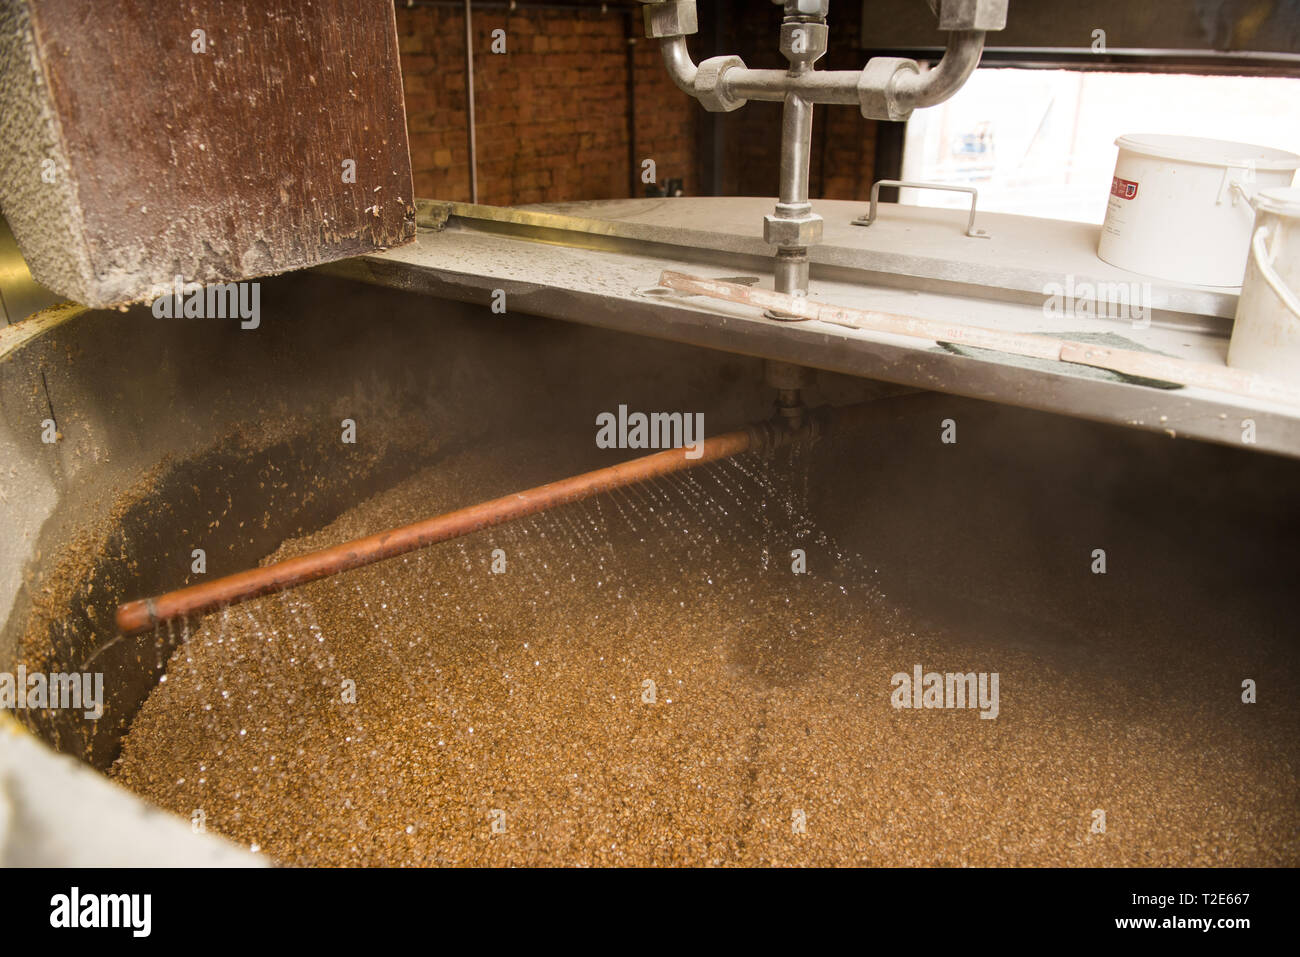 Brewing process, inside vat fermentation Stock Photo